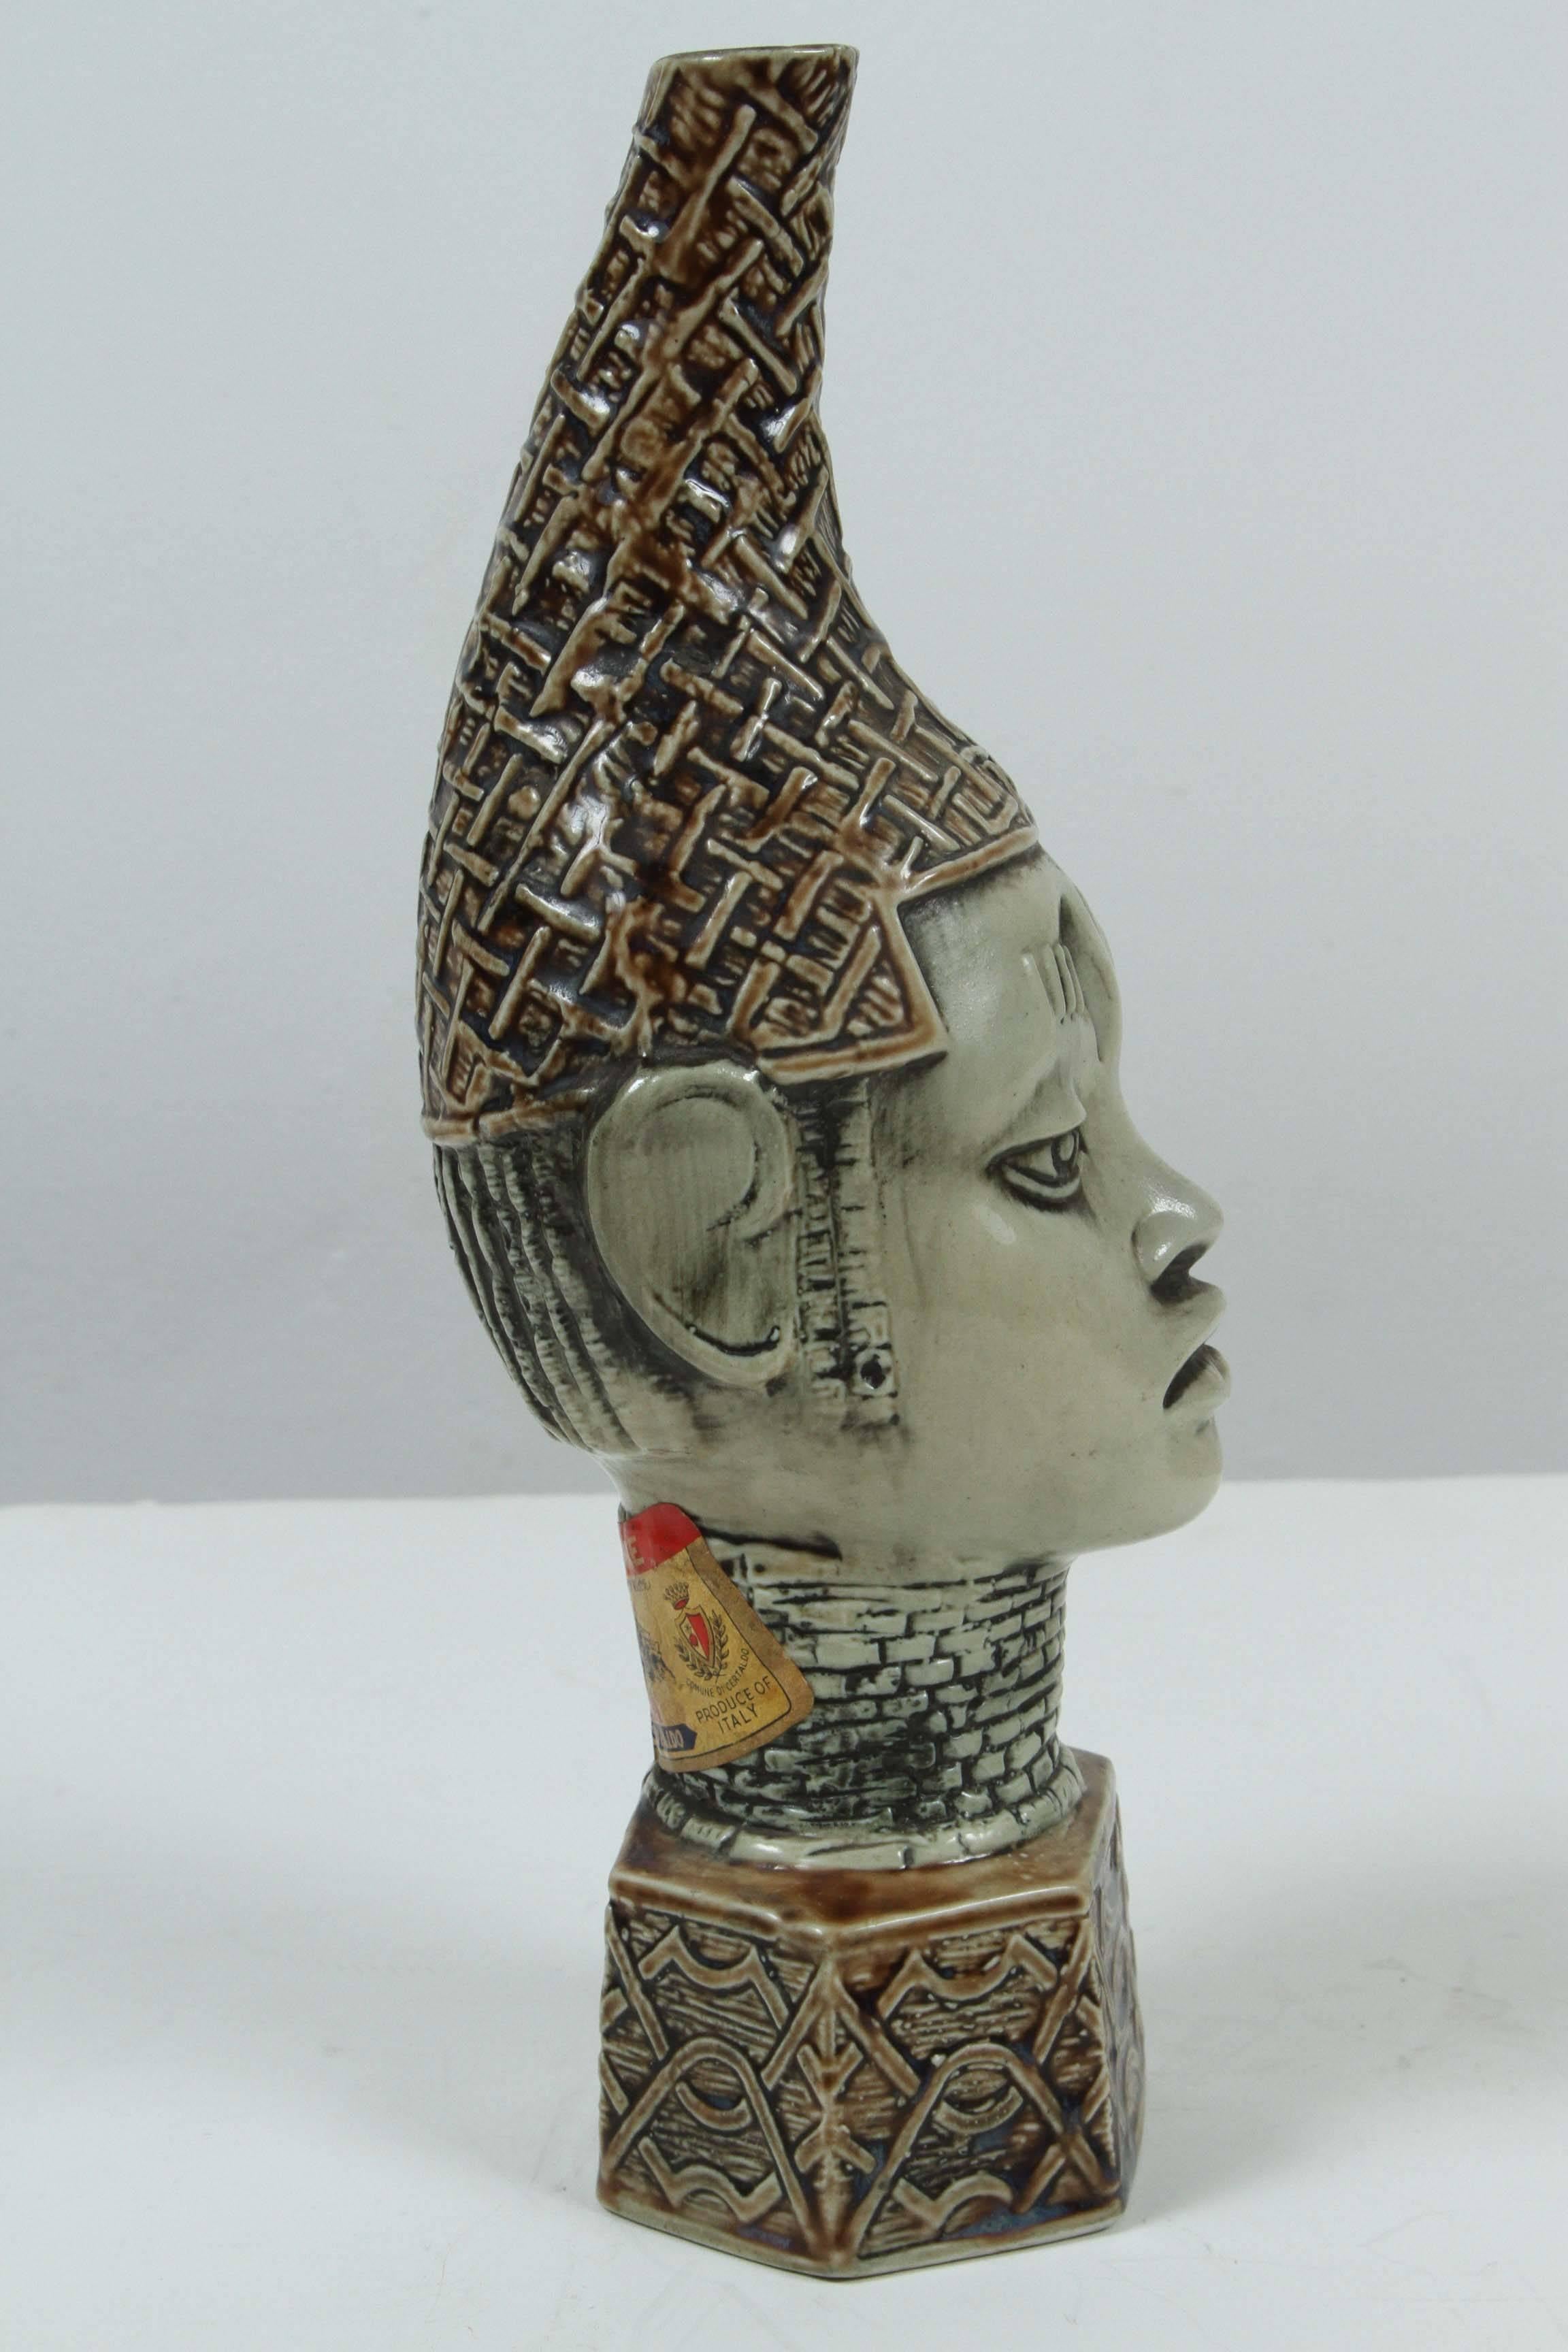 Italian African Benin Queen Mother Commemorative Ceramic Head by the Edo people